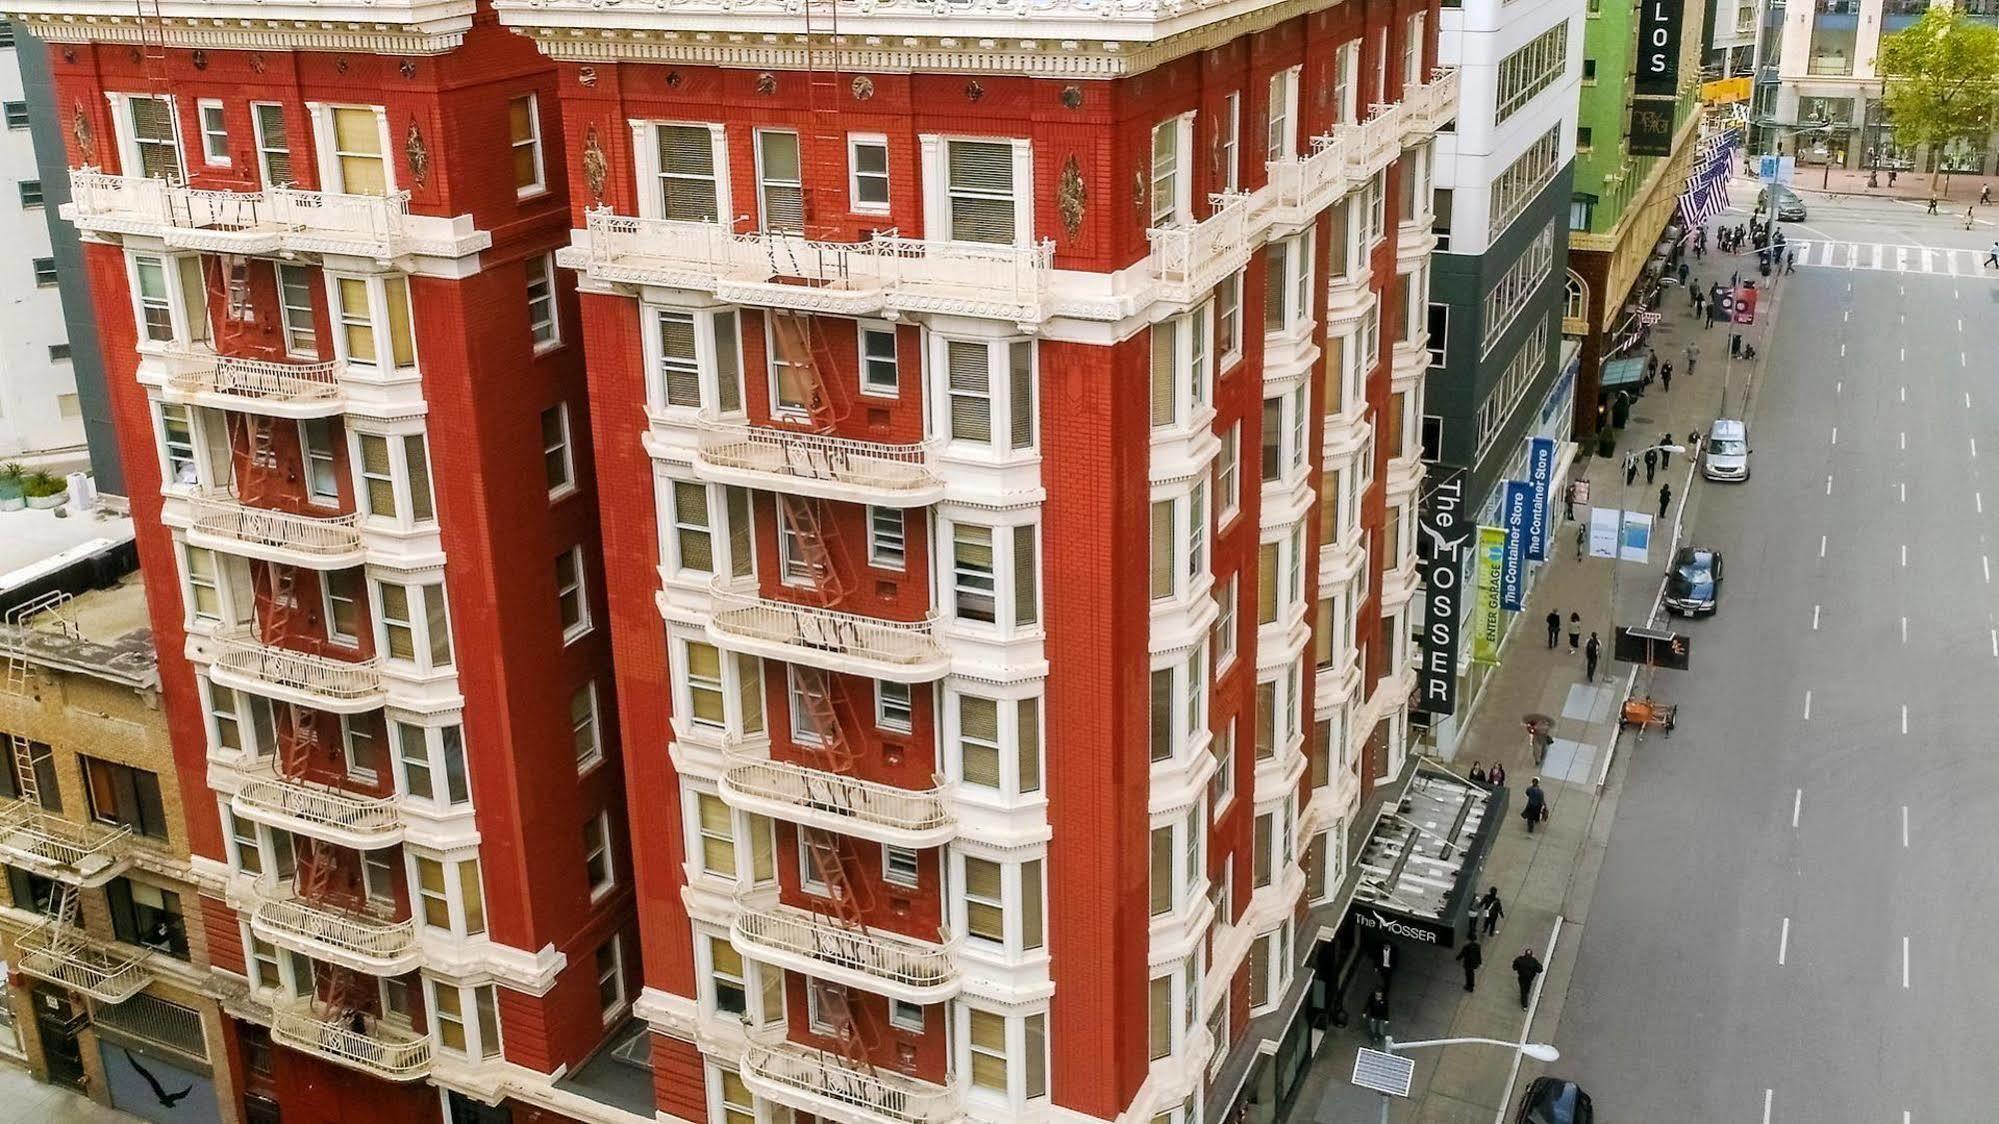 The Mosser Hotel San Francisco Exterior photo